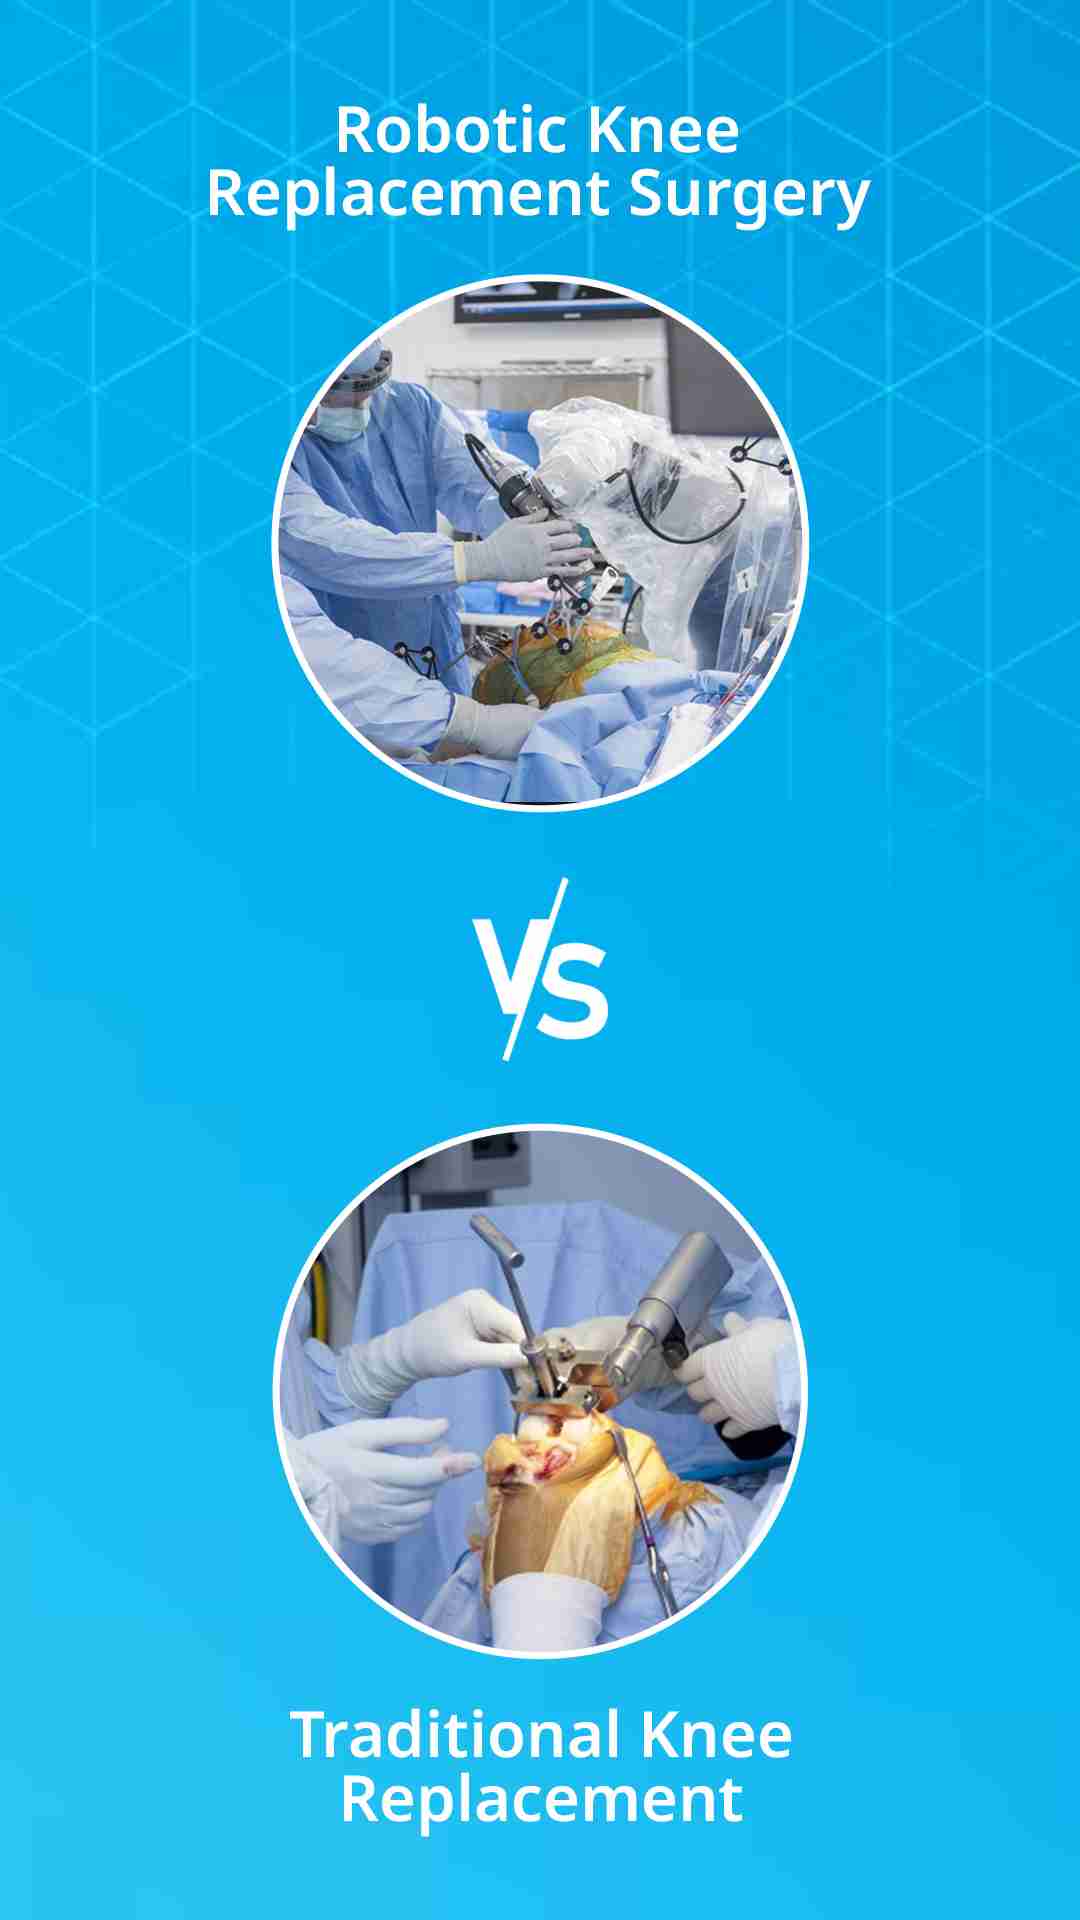 Robotic Knee Replacement Surgery vs. Traditional Knee Replacement Surgery